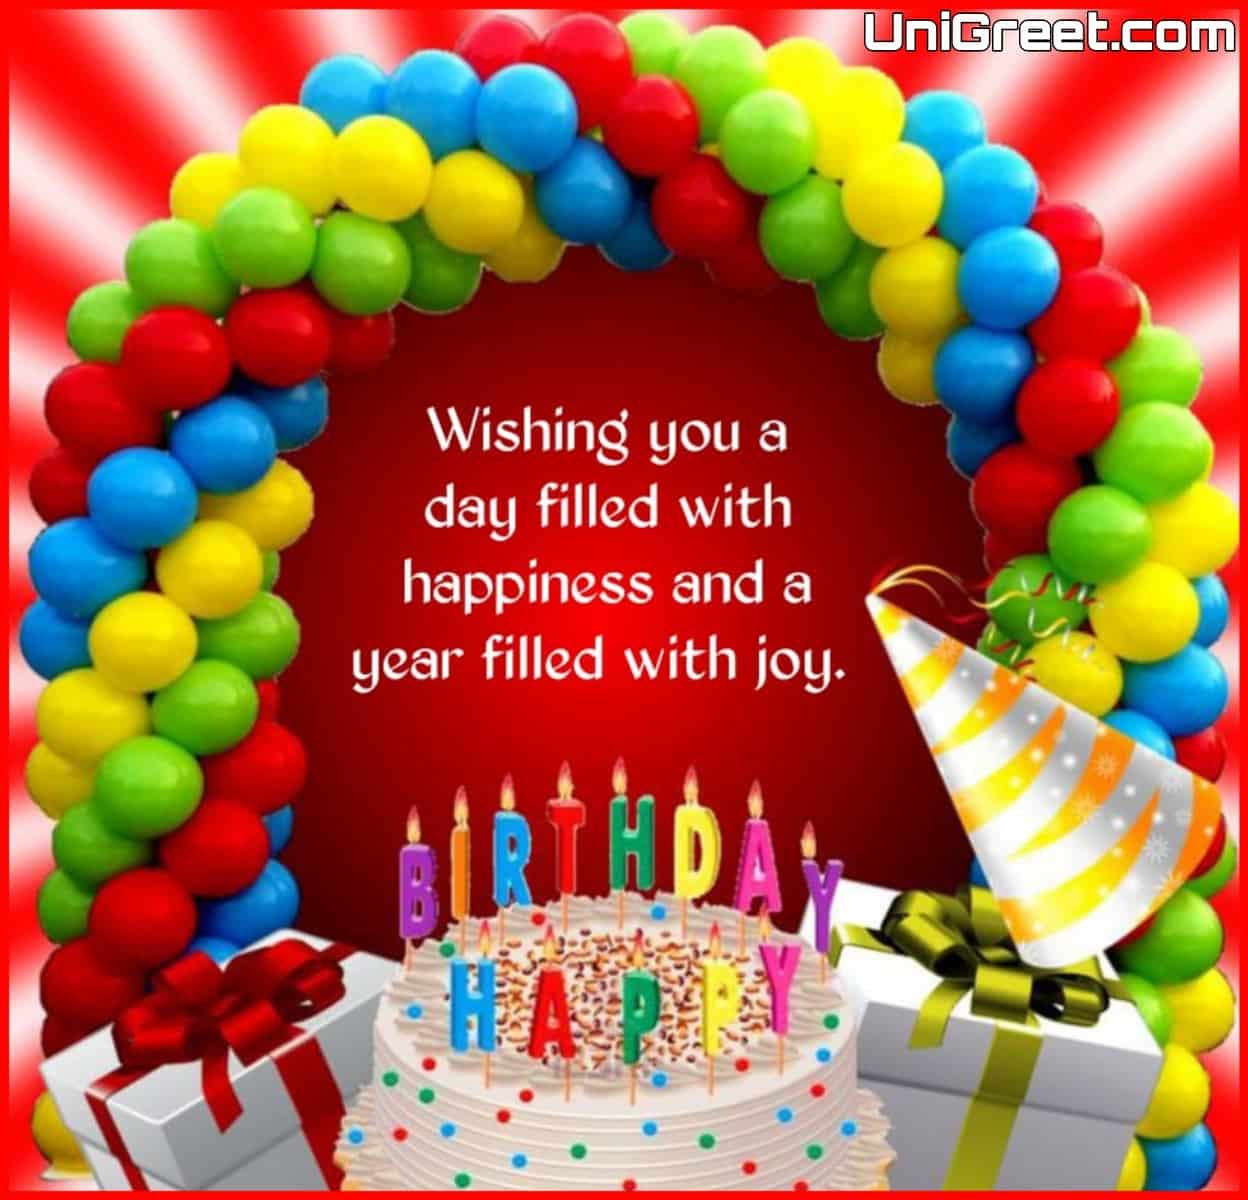 Top 999+ wish you happy birthday images – Amazing Collection wish you happy birthday images Full 4K